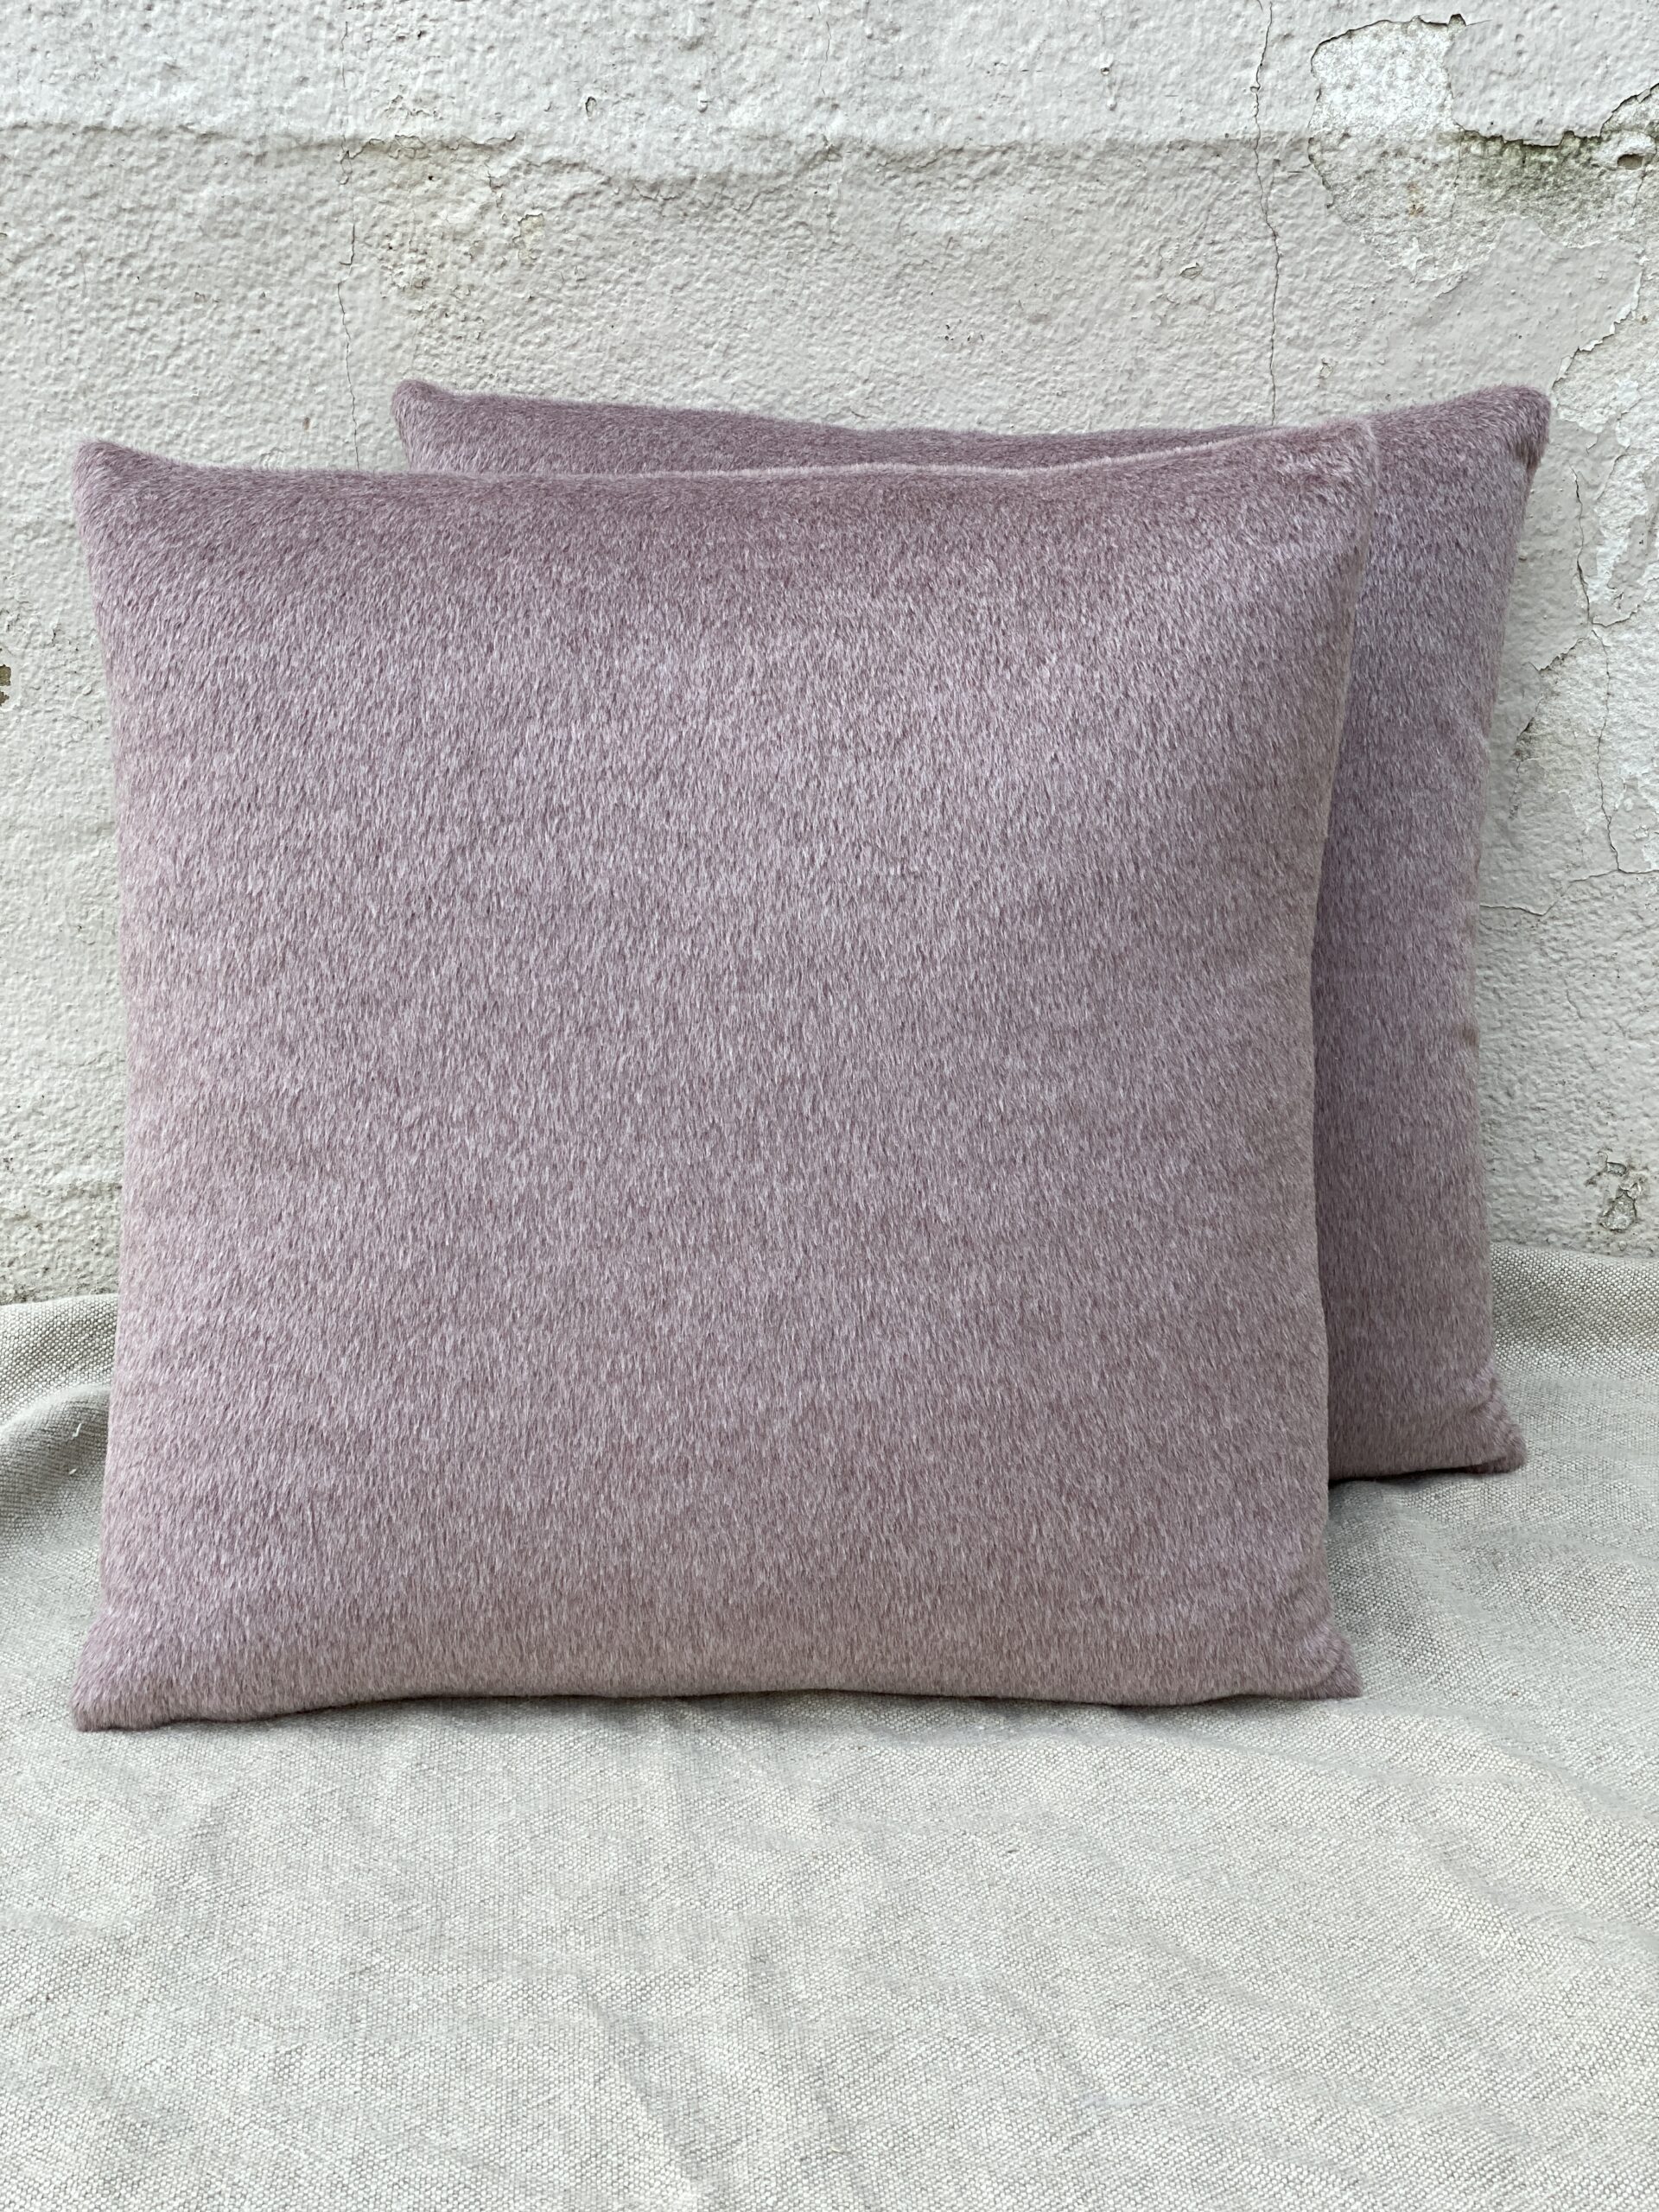 JLA Designs Alpaca Pillows